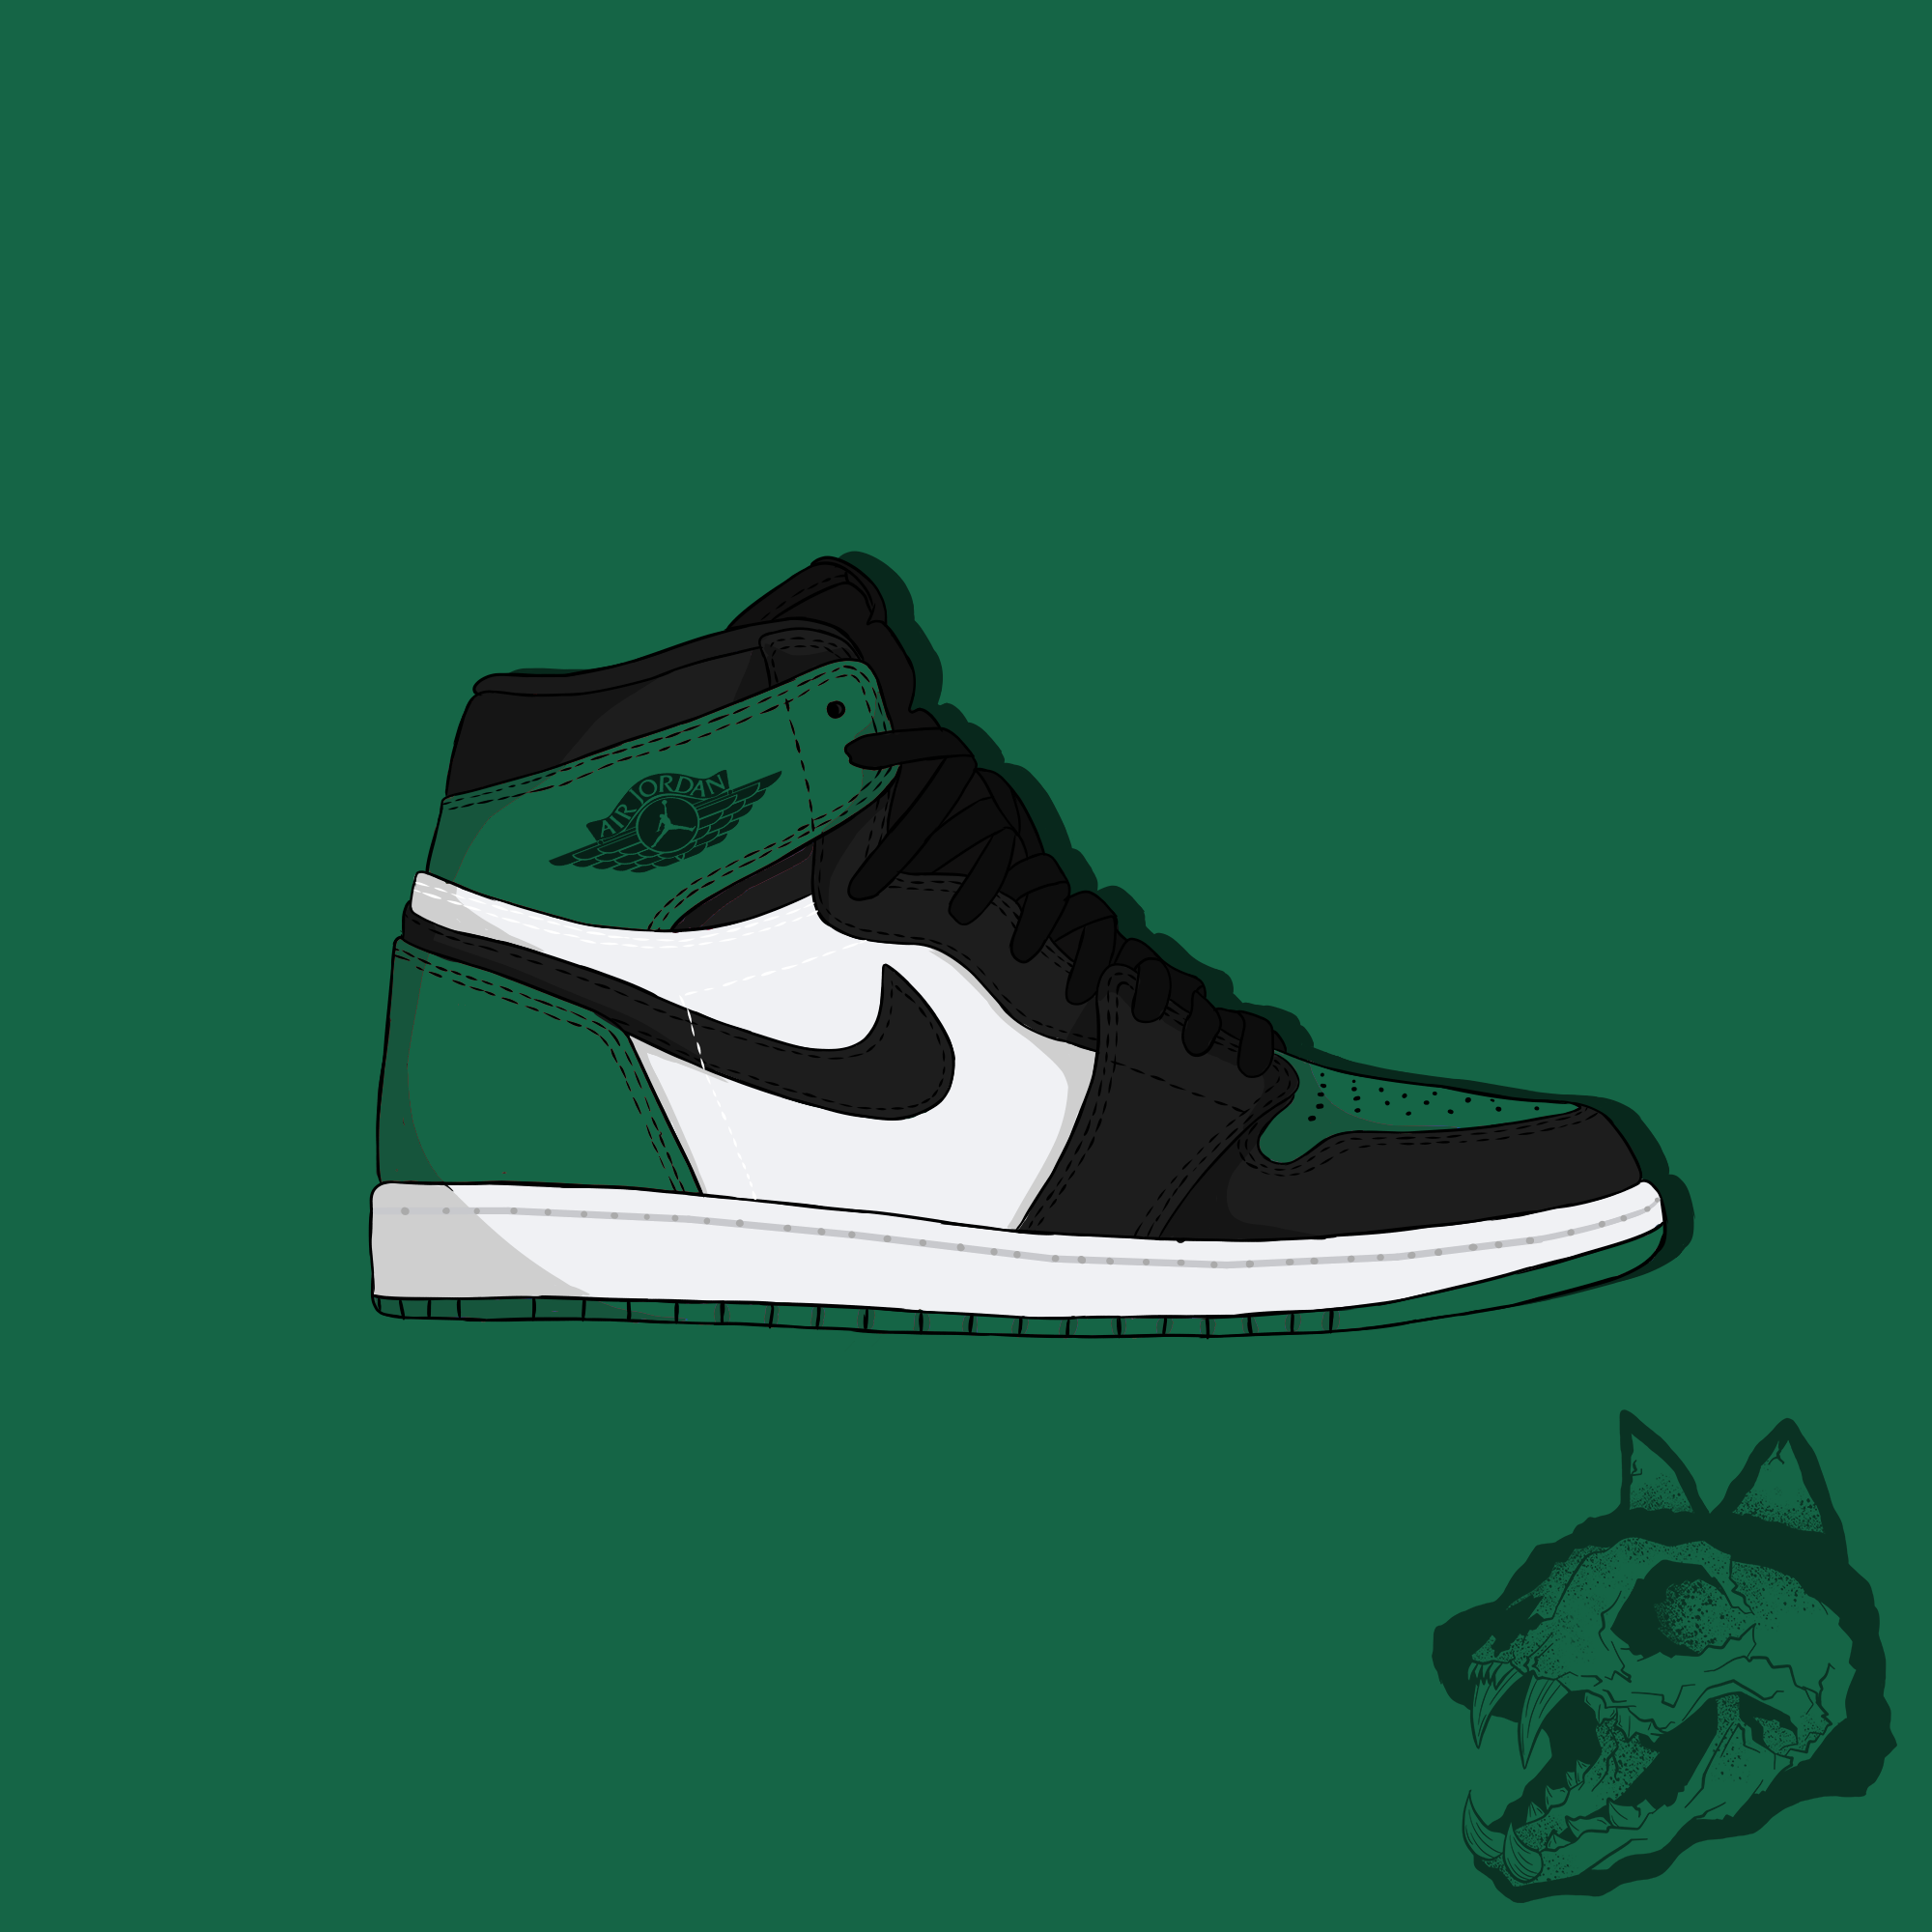 Green Jordans Wallpapers